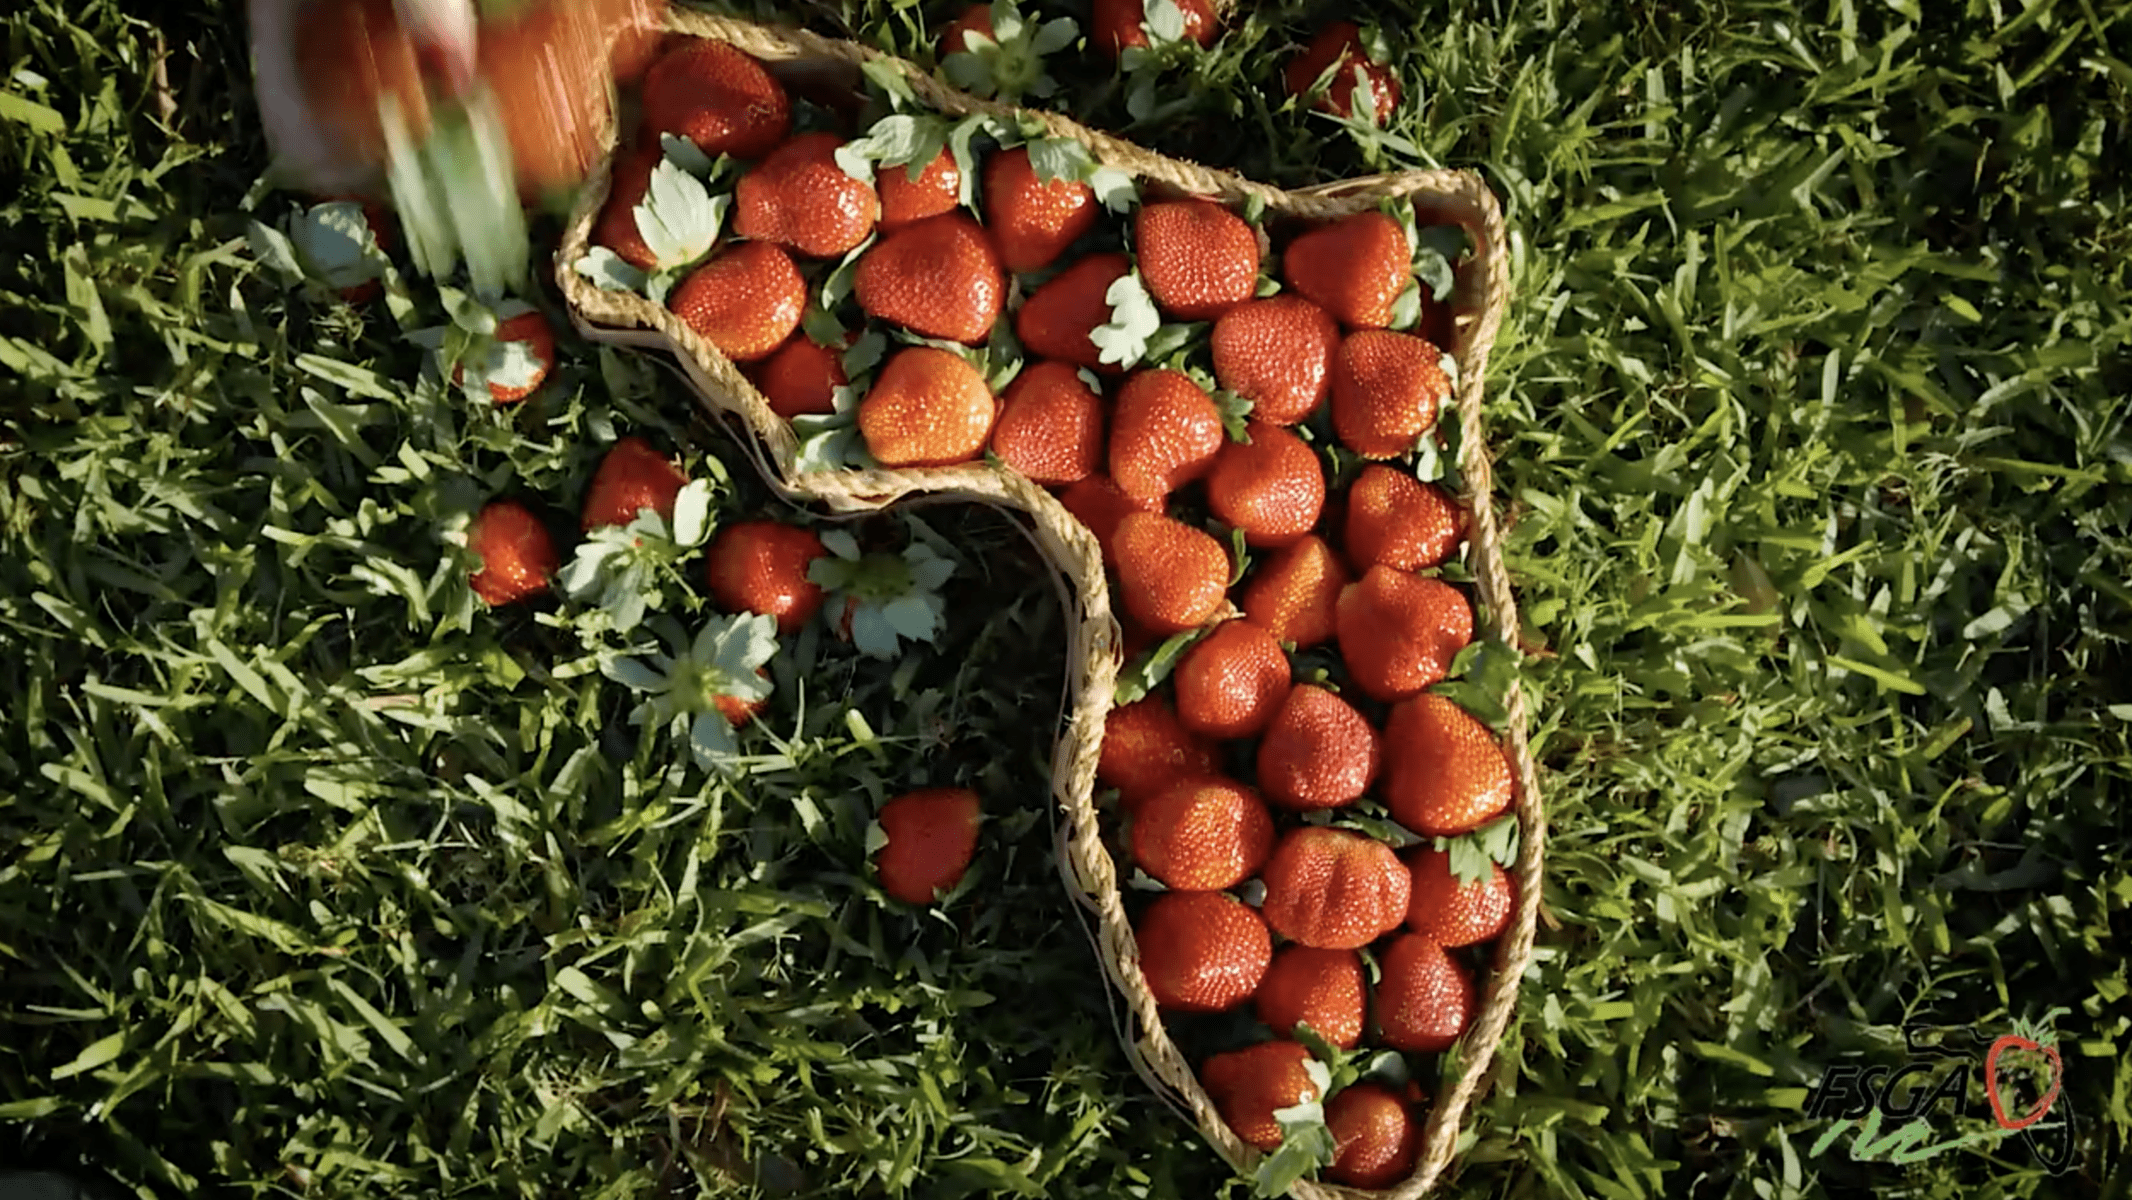 FSGA Behind-the-Scenes: Growing Florida Strawberries